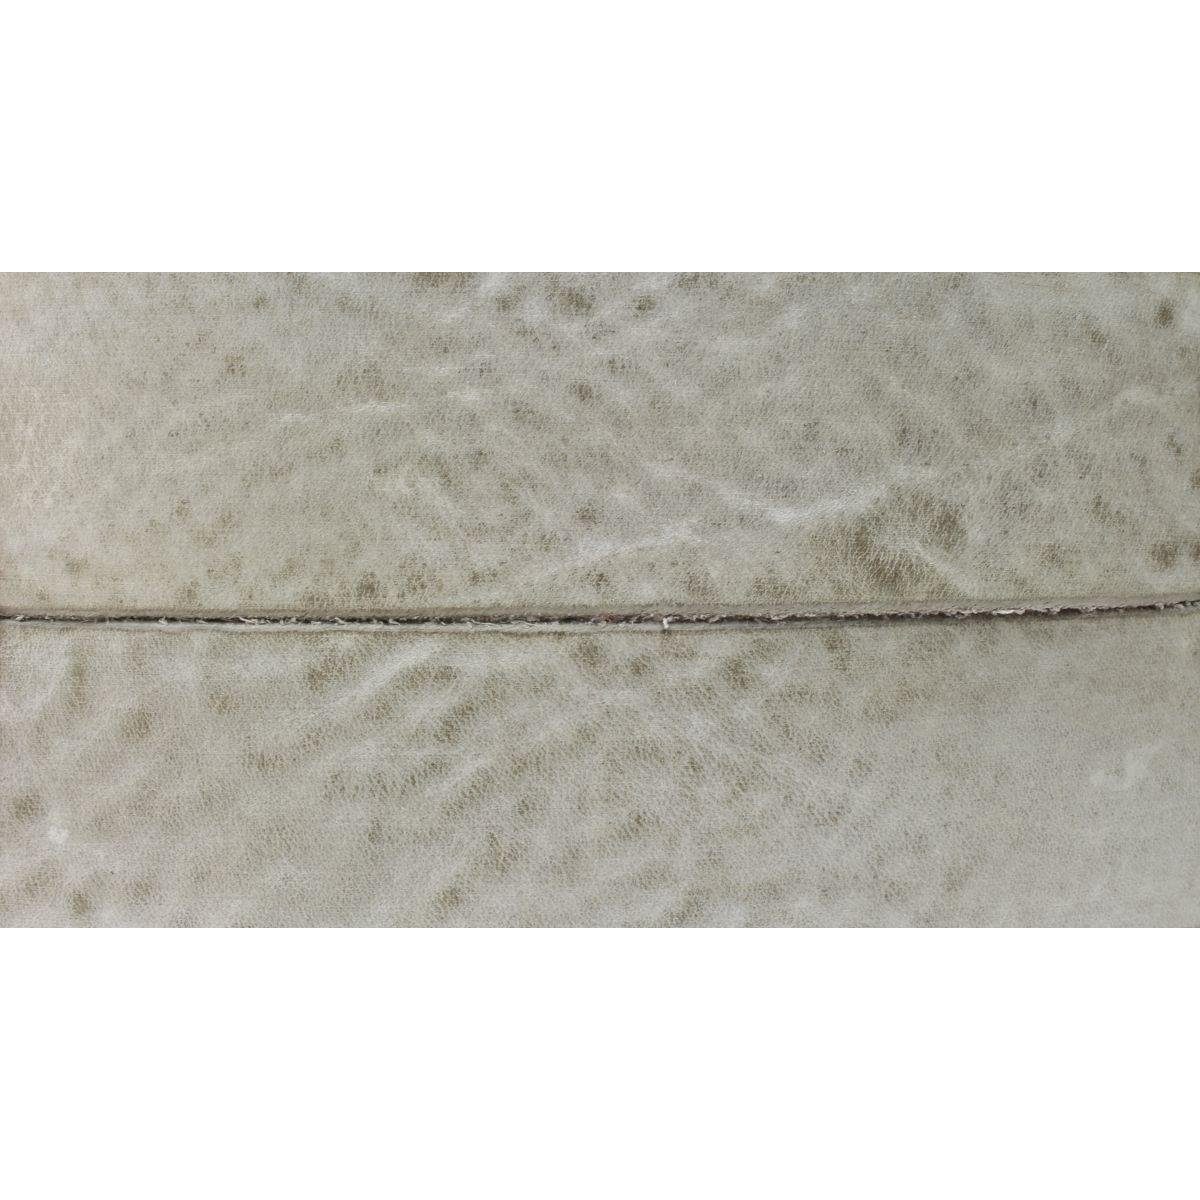 Gürtelschnalle BELTINGER Gürtel Ledergürtel Altmessing 4 Vollrindleder aus Khaki, cm - weichem altmessing mit